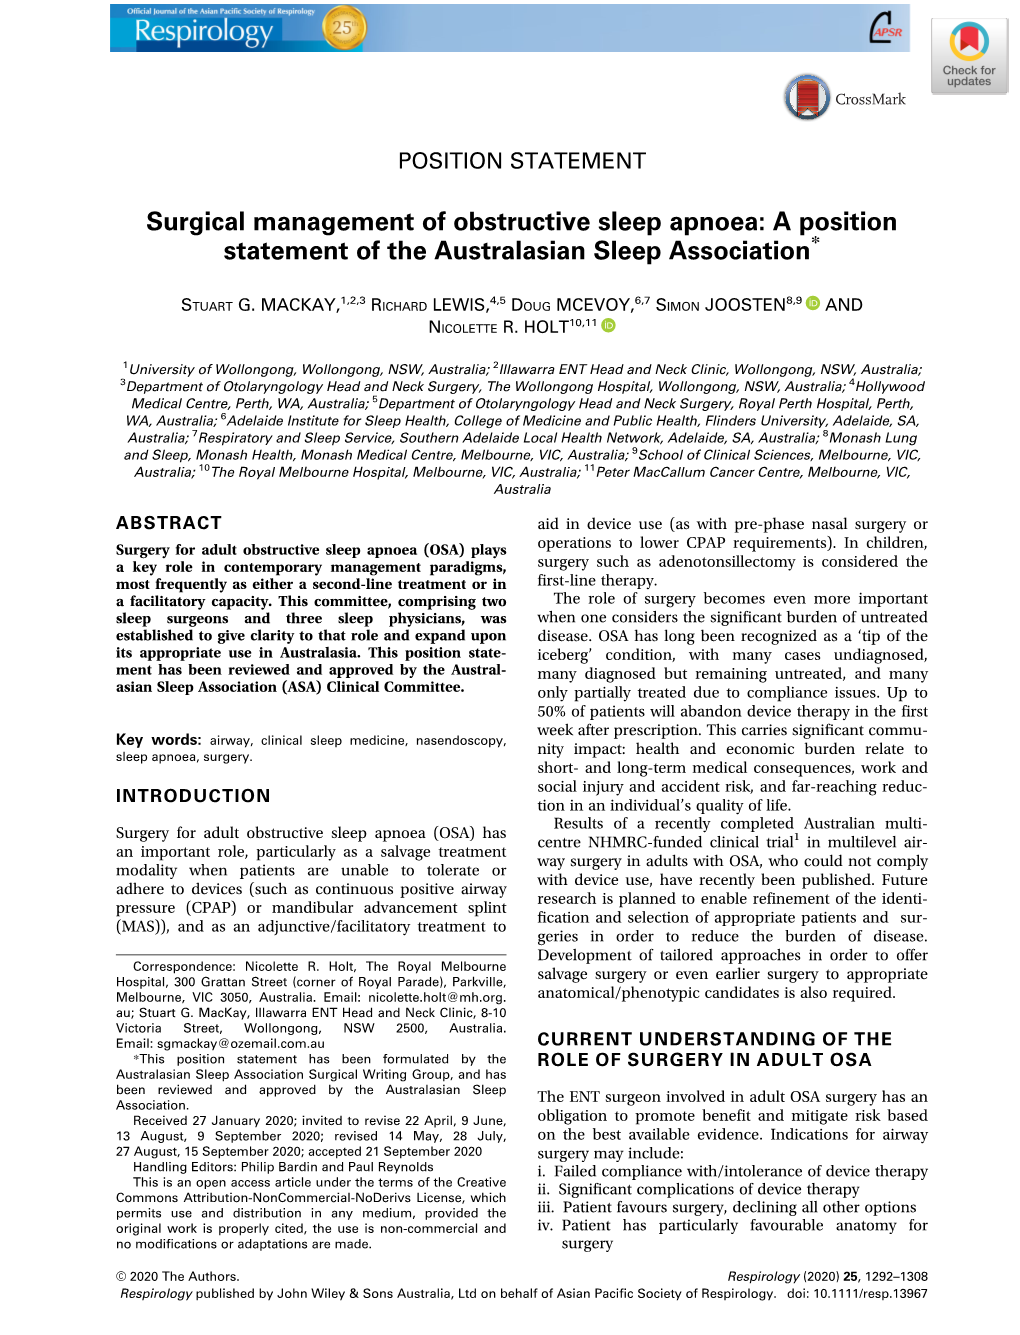 Surgical Management of Obstructive Sleep Apnoea: a Position Statement of the Australasian Sleep Association*